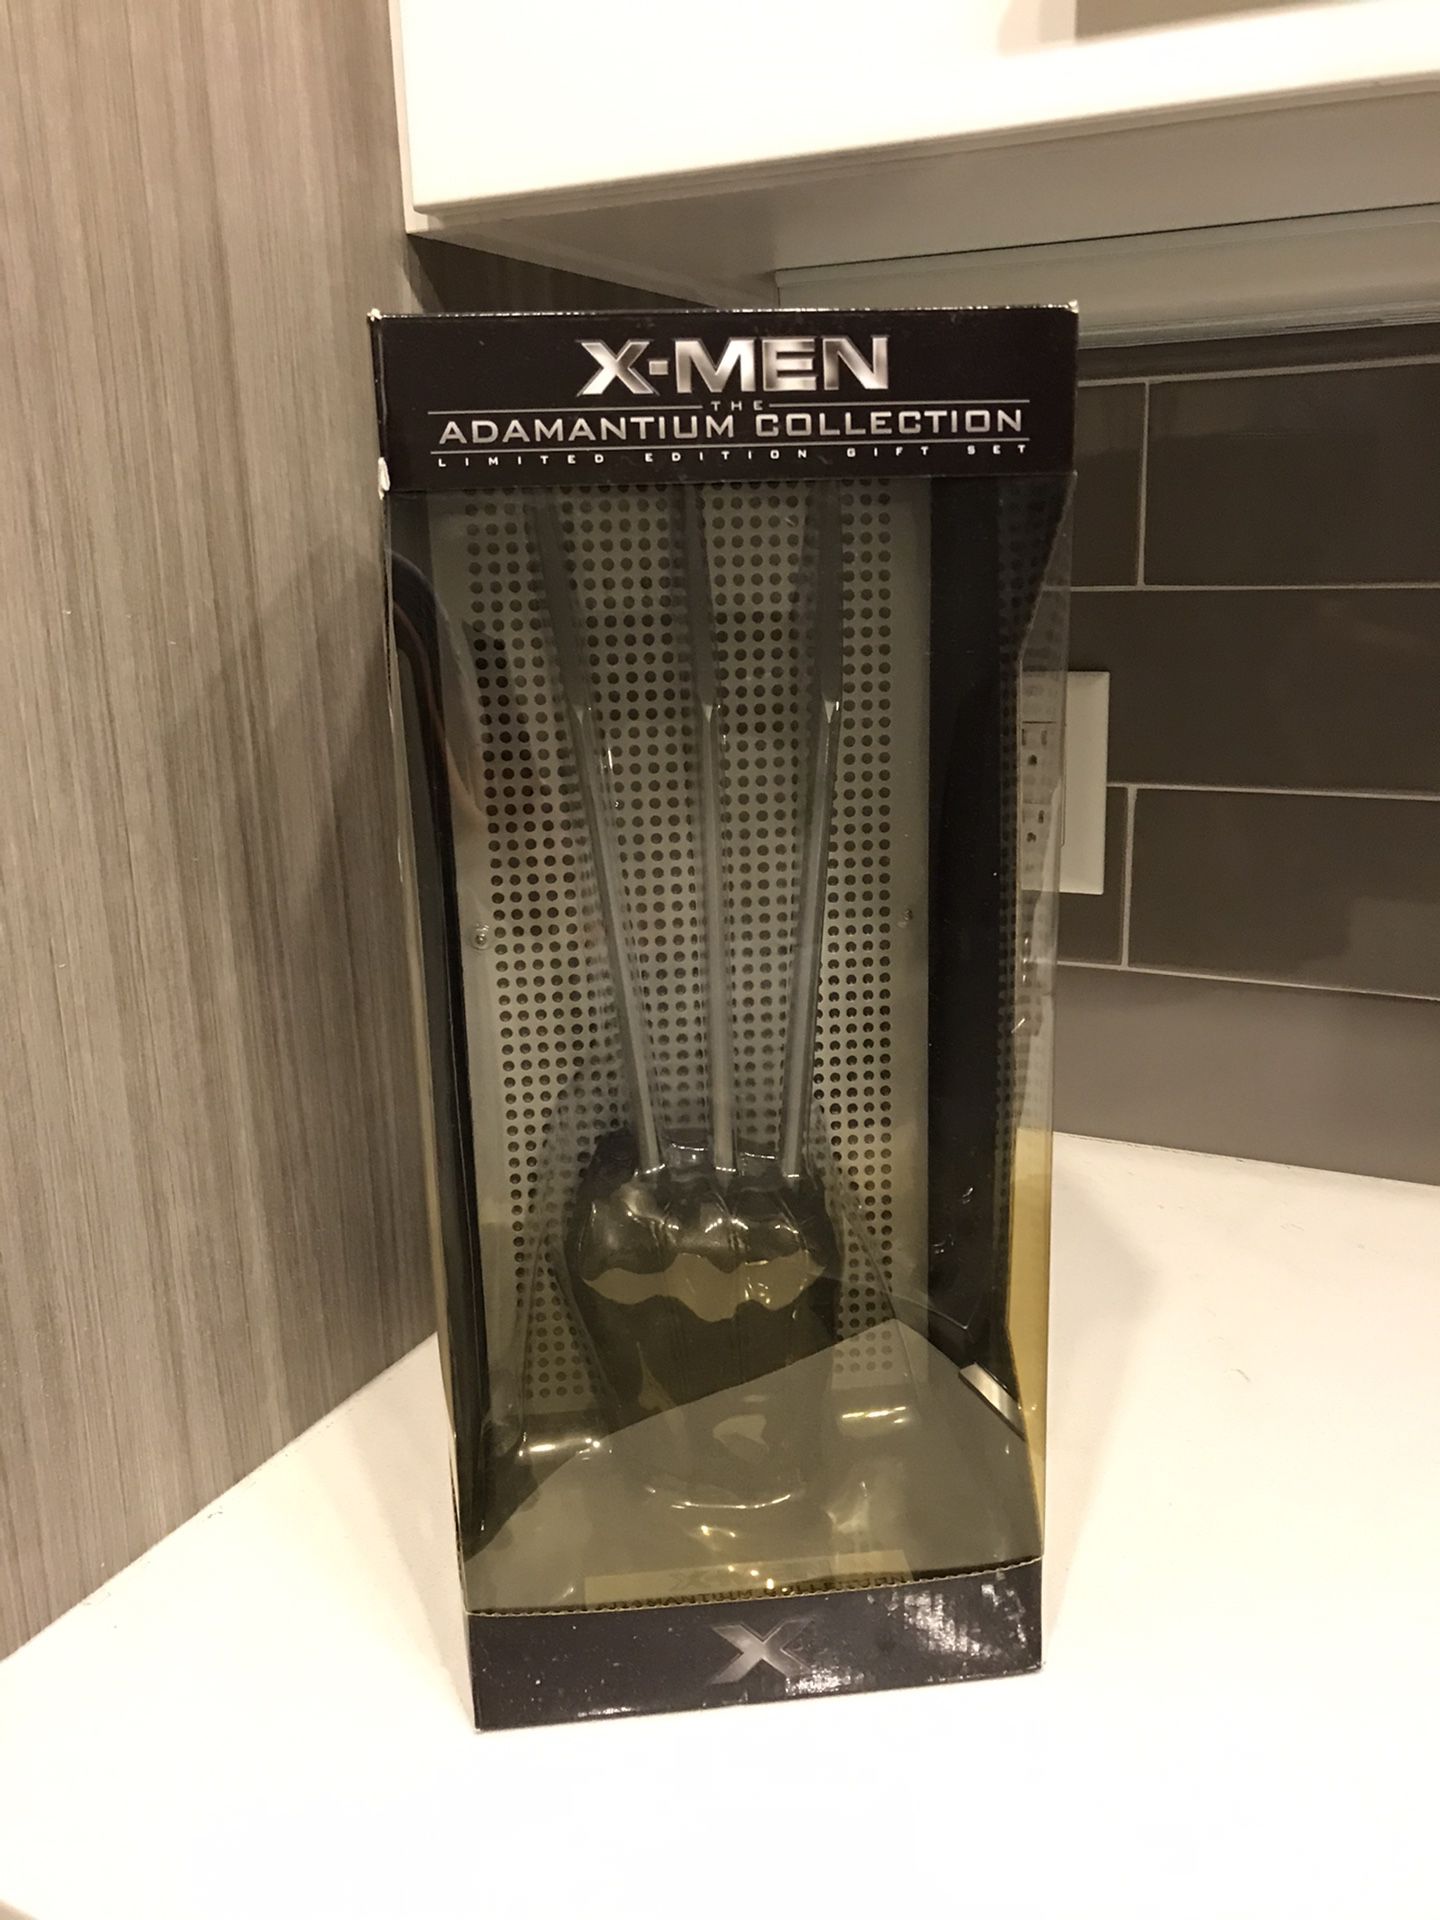 X-Men Adamantium Collection Blu-ray set